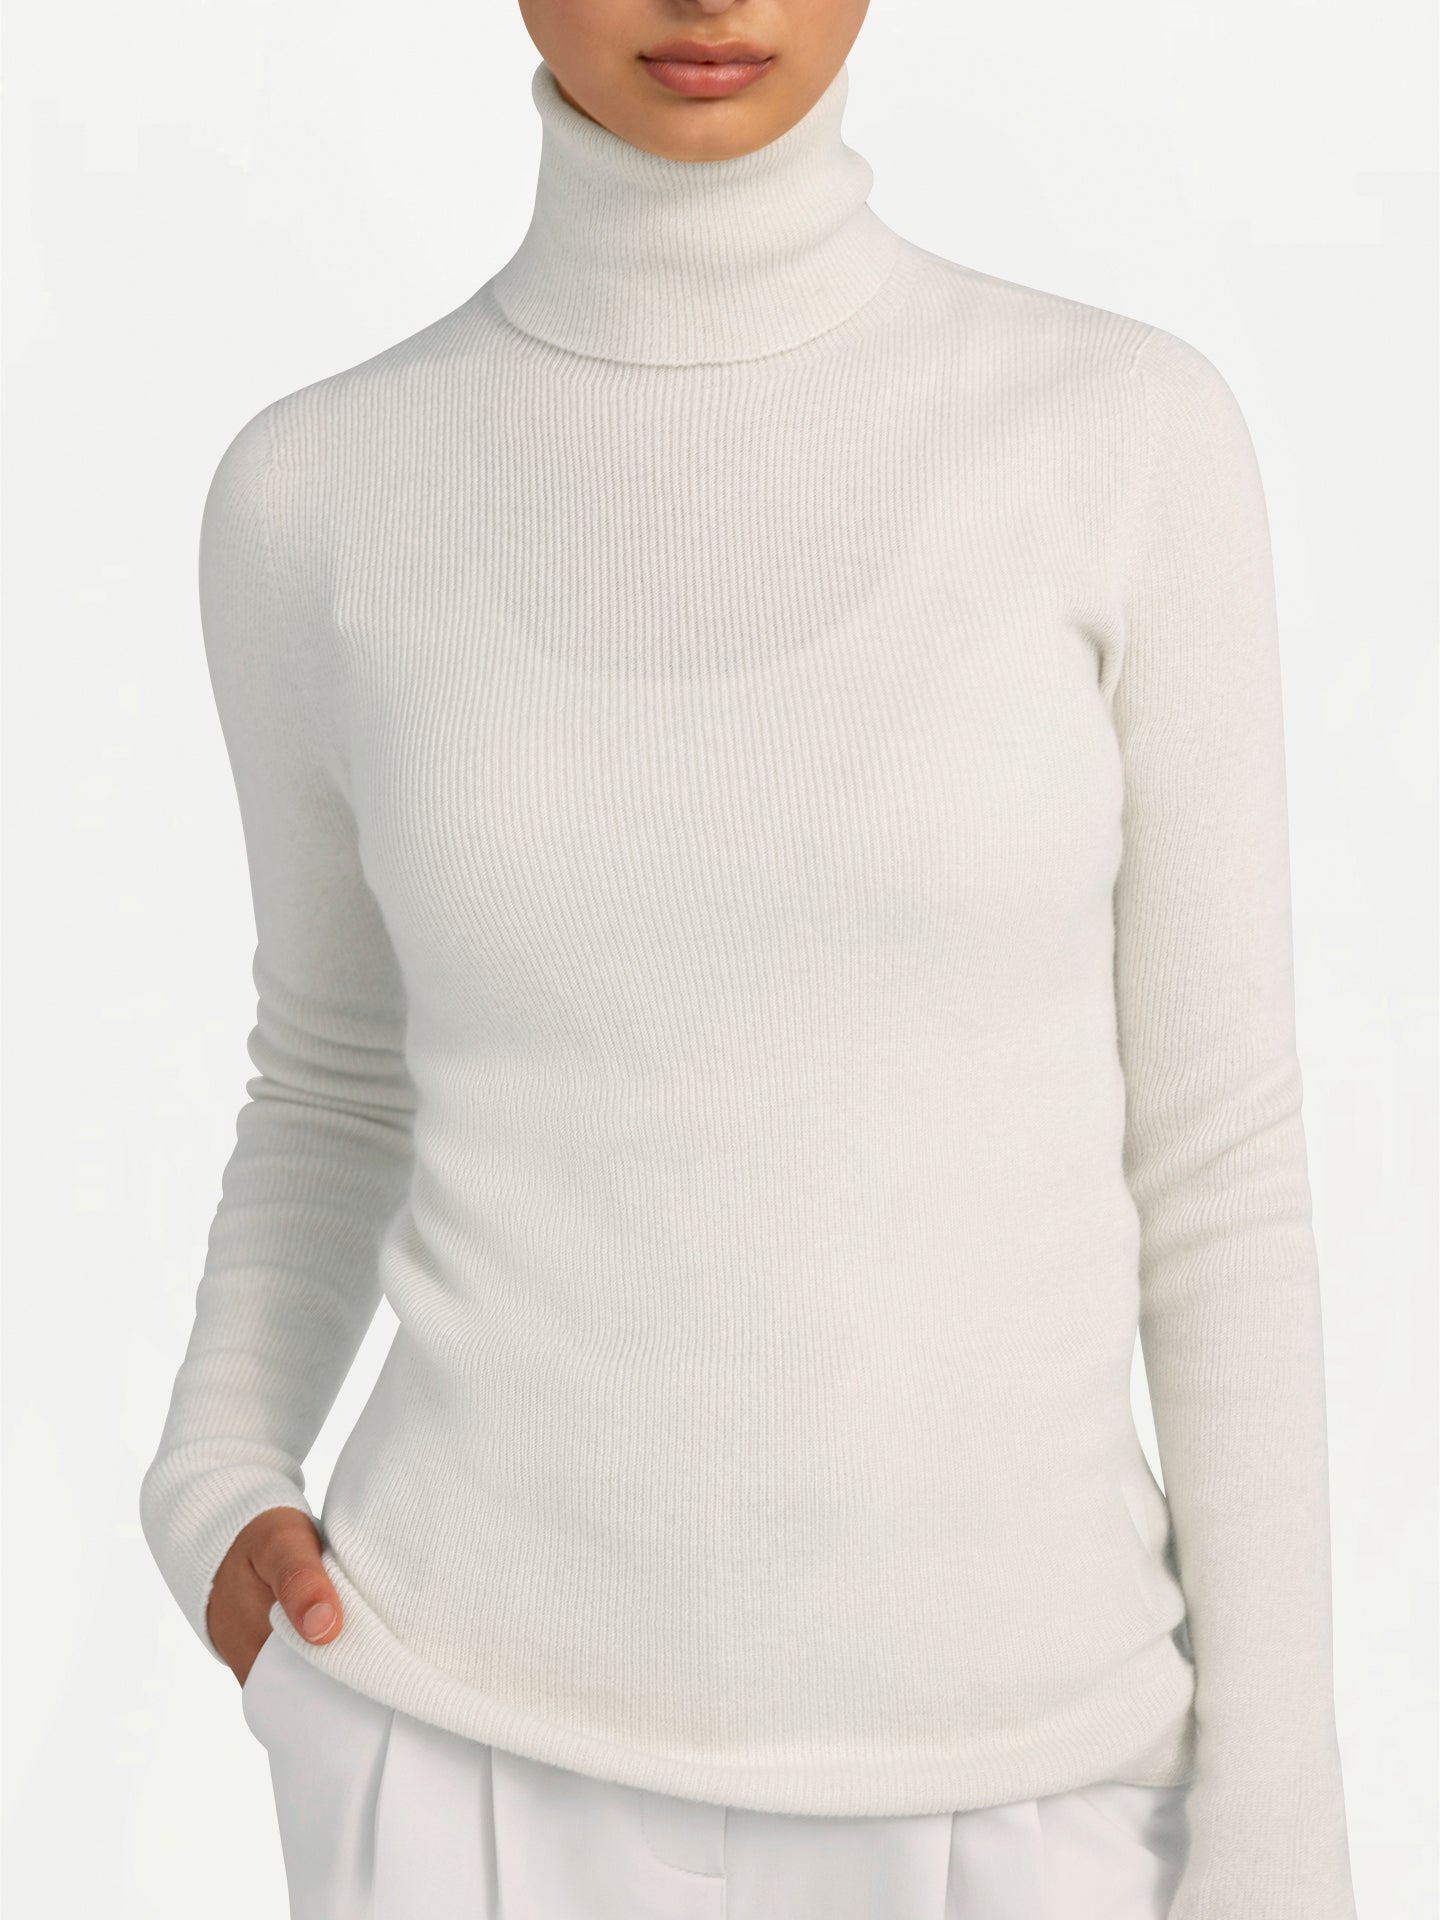 Women's Organic Cashmere Fitted Cashmere Turtleneck Off White - Gobi Cashmere